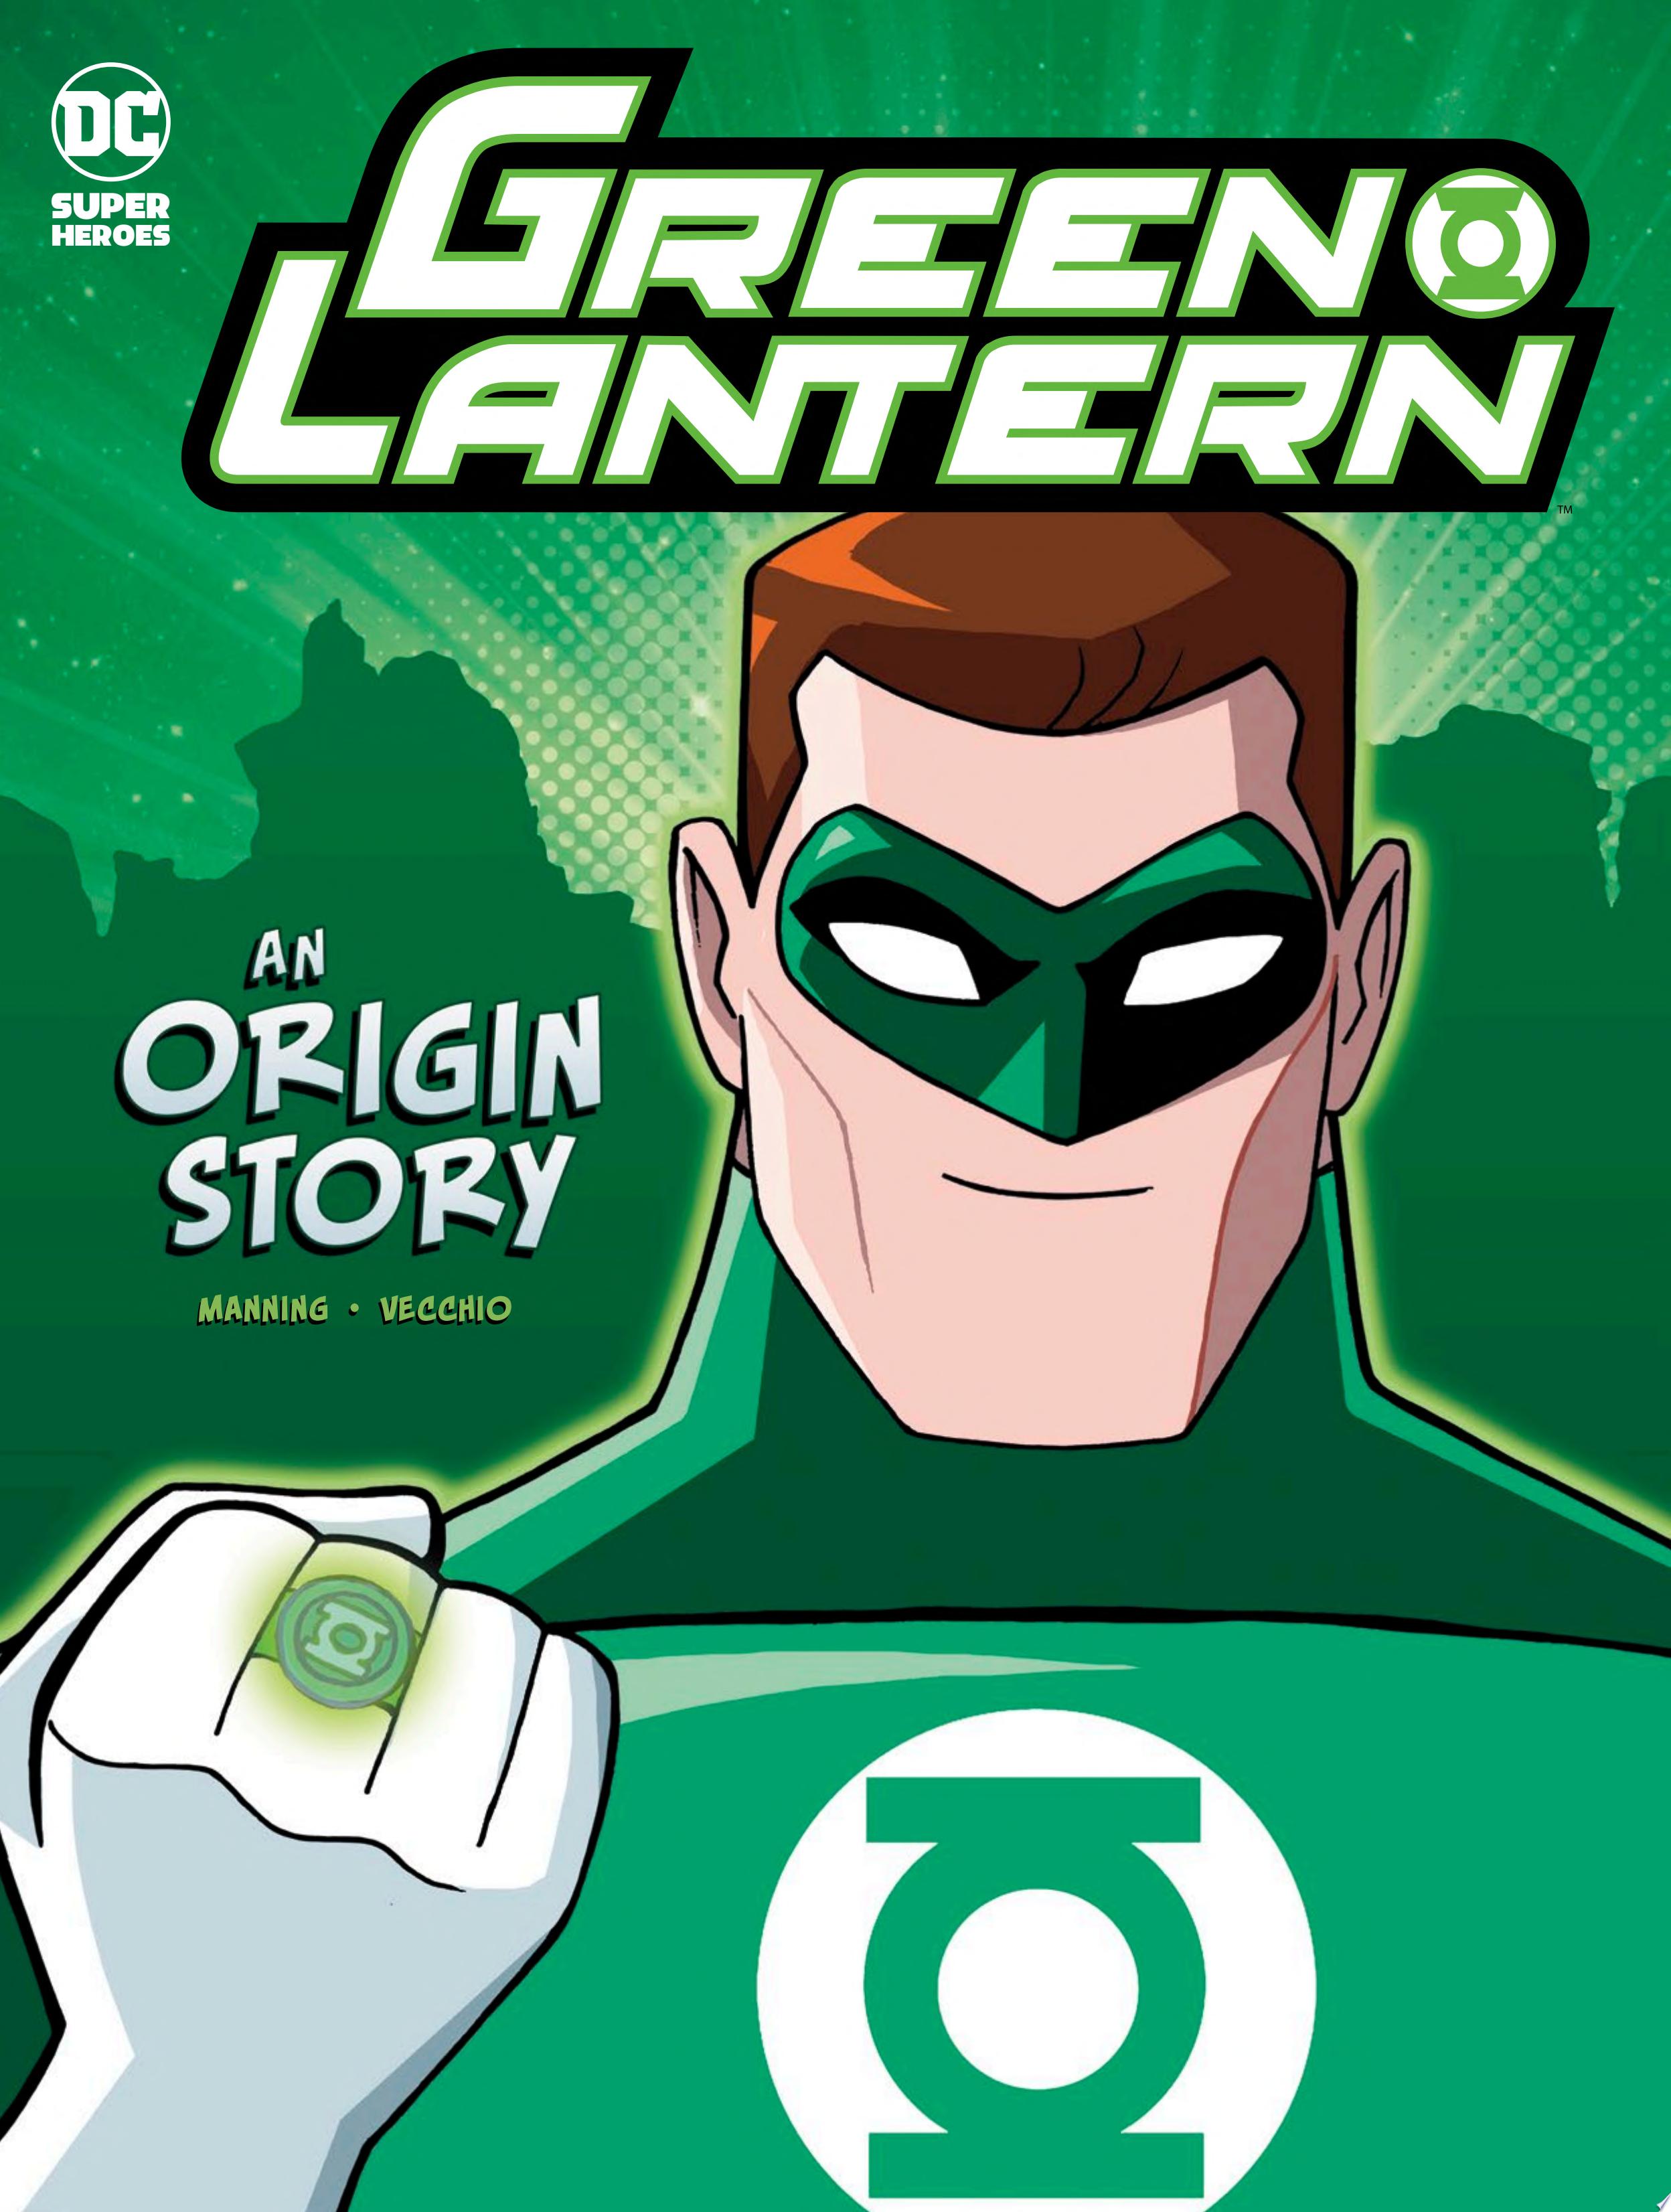 Image for "Green Lantern"